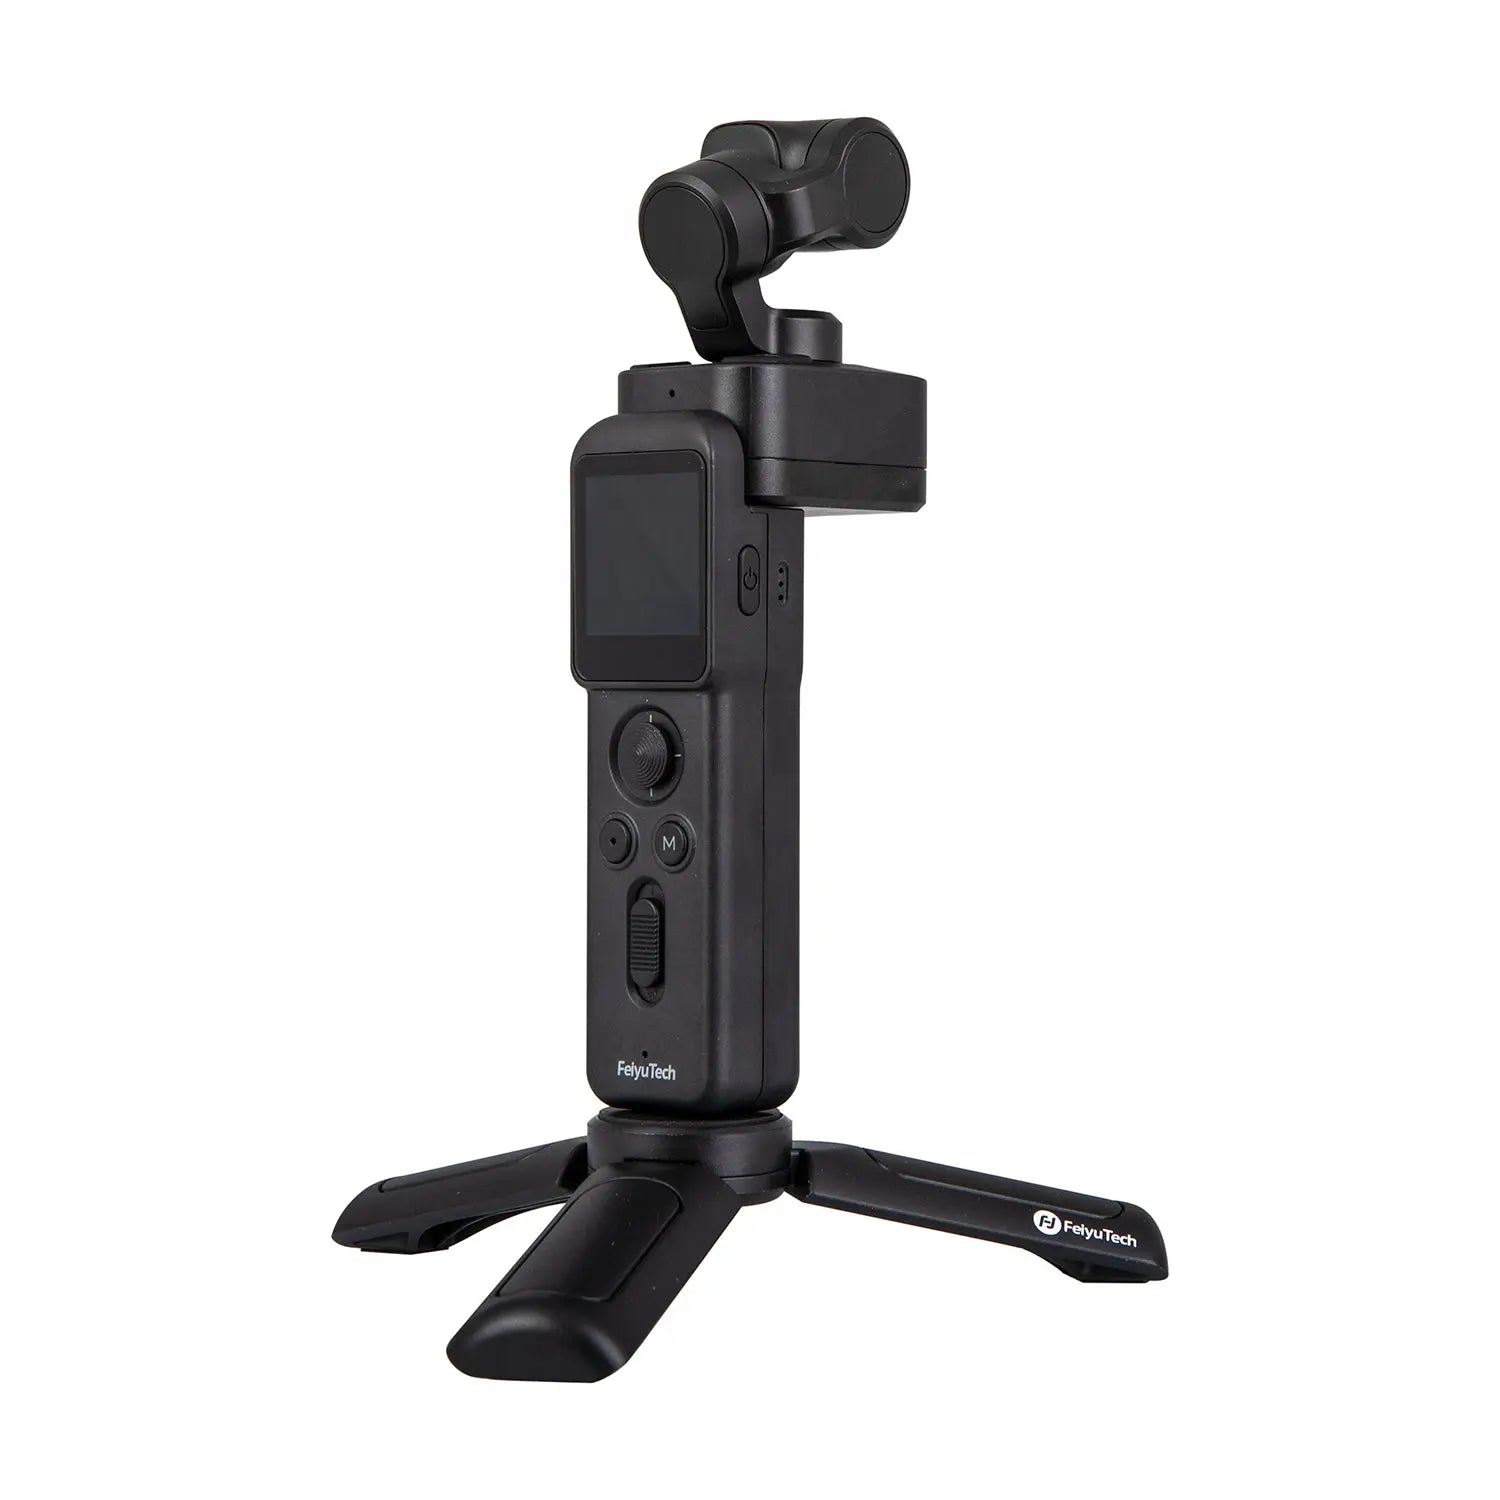 Feiyu Pocket 3 cordless detachable 3-axis gimbal camera7